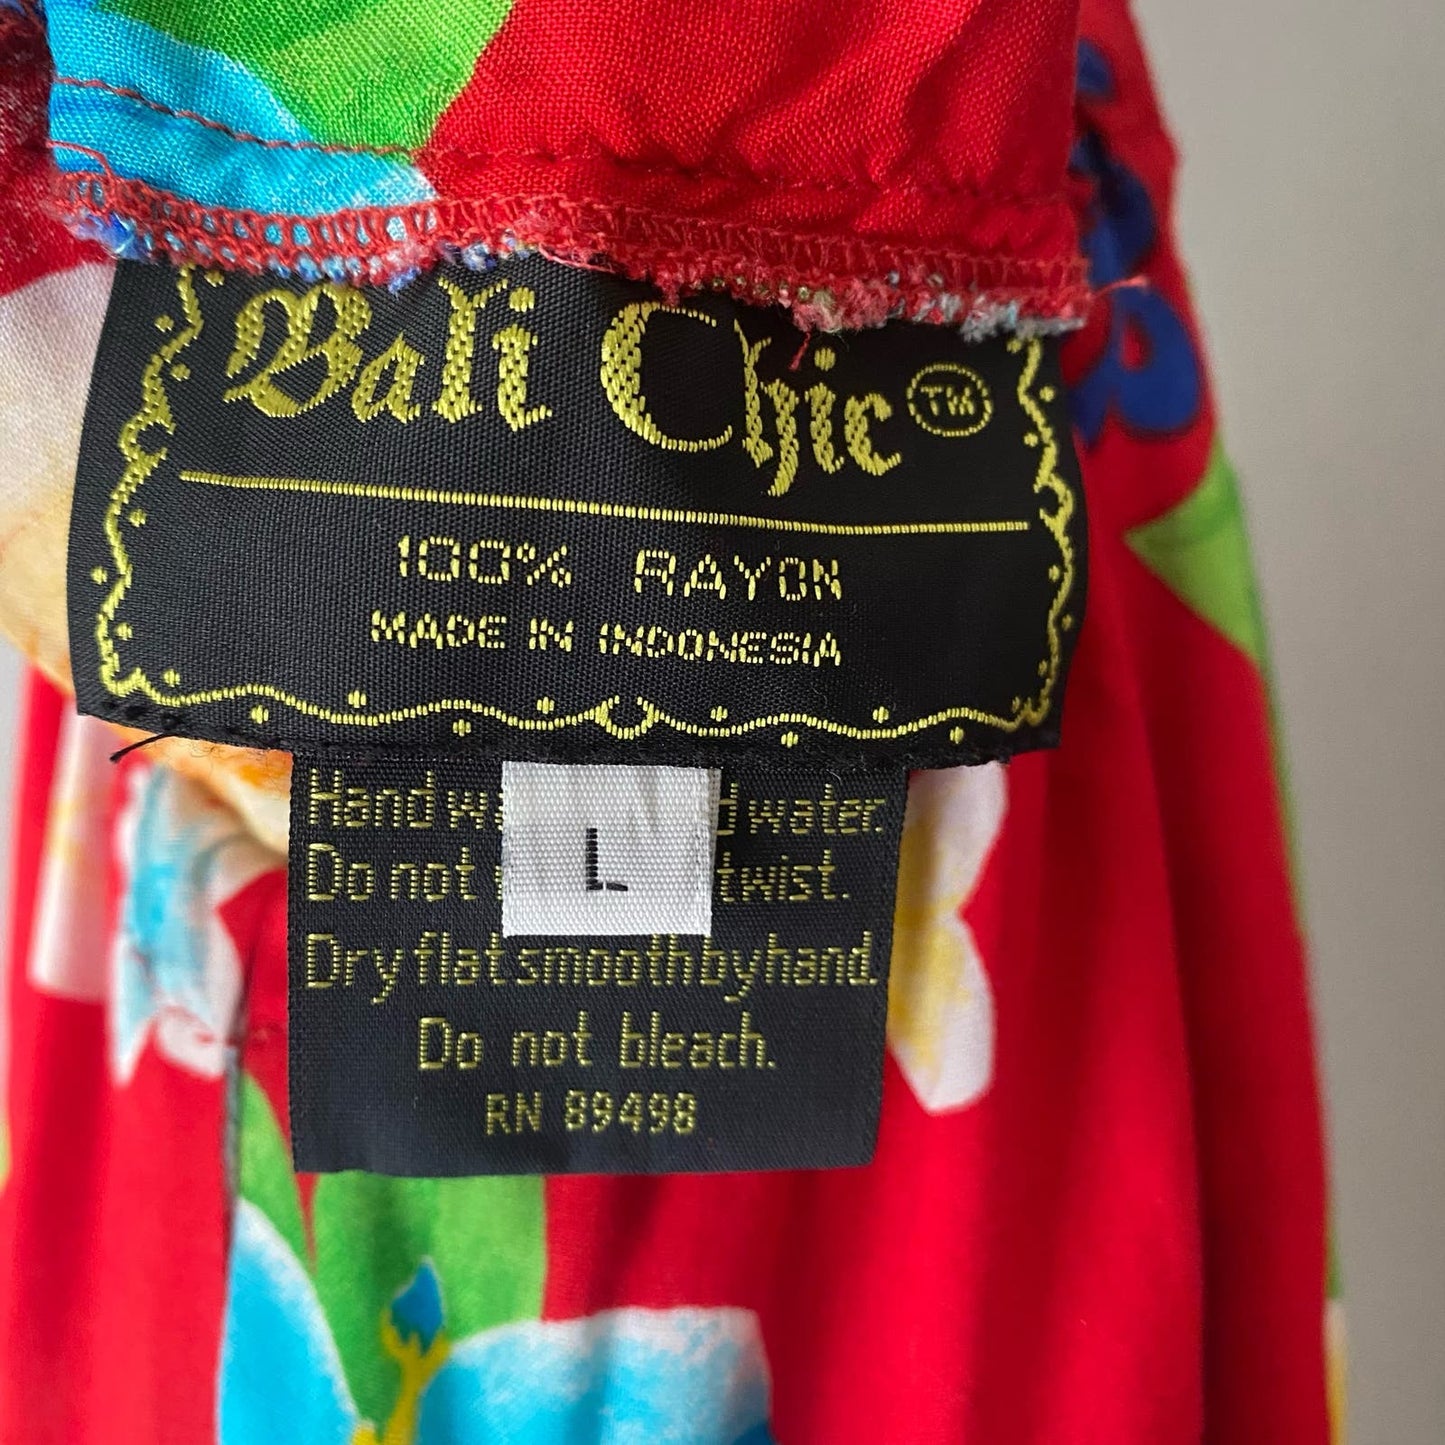 Bali Chic sz L spaghetti strap hibiscus print red maxi vacation beach dress